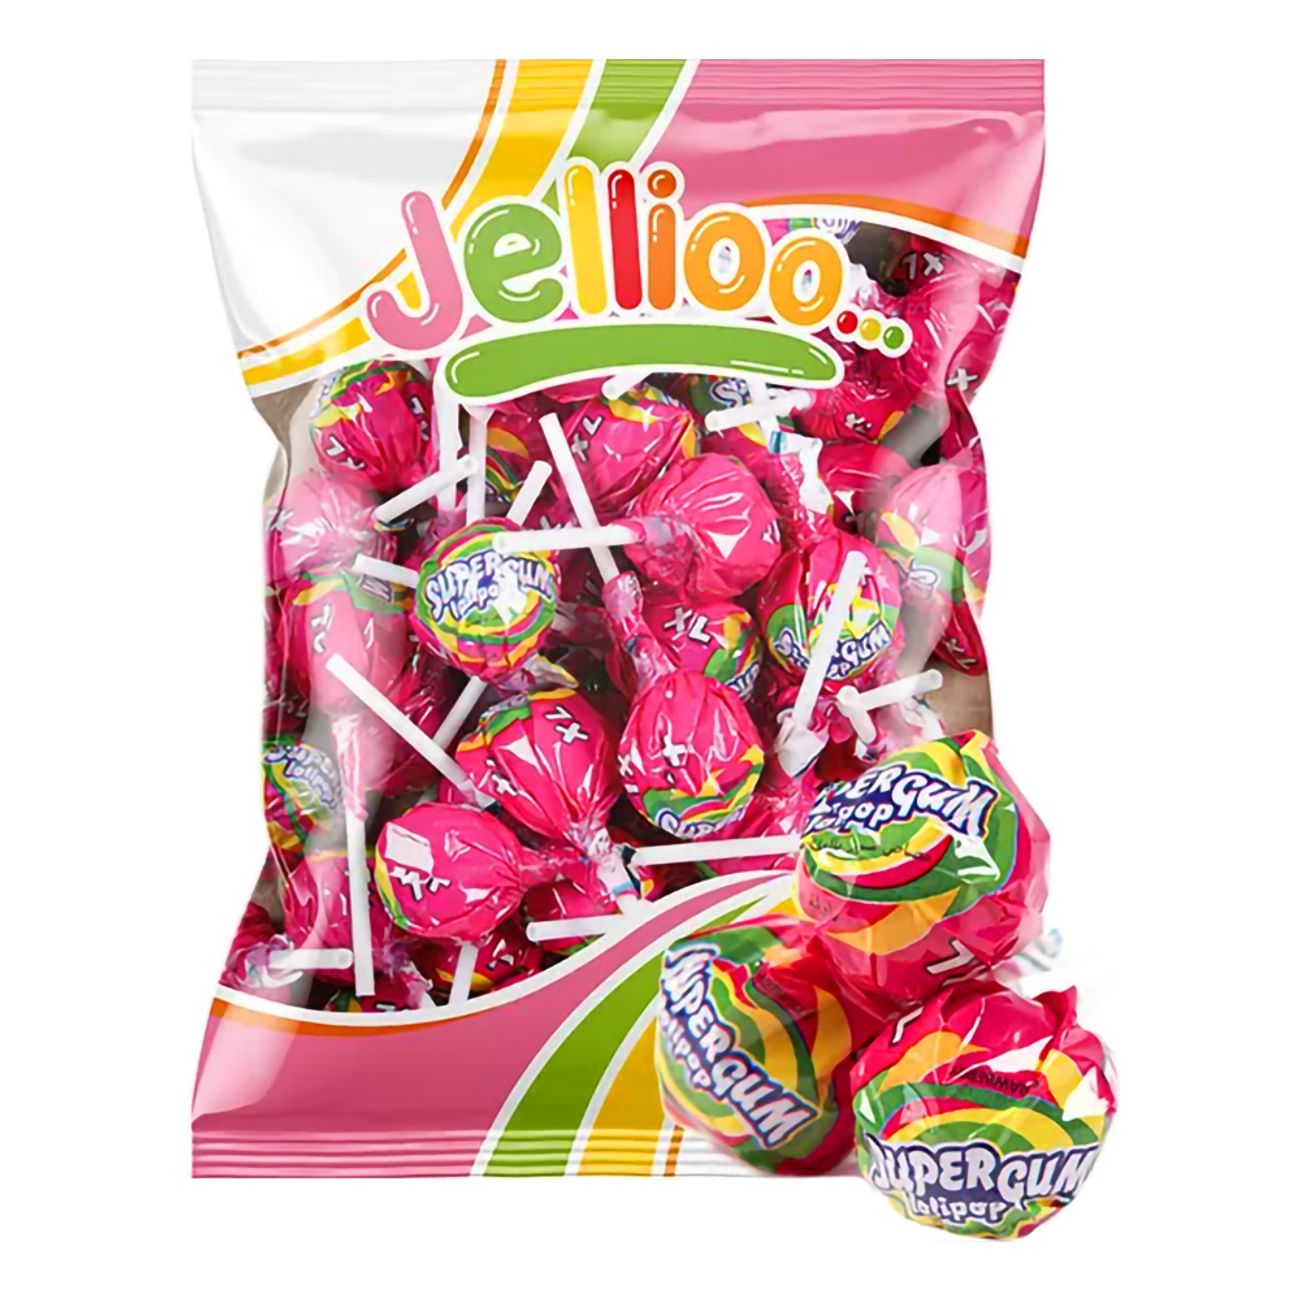 super-gum-lollipop-strawberry-storpack-103119-1